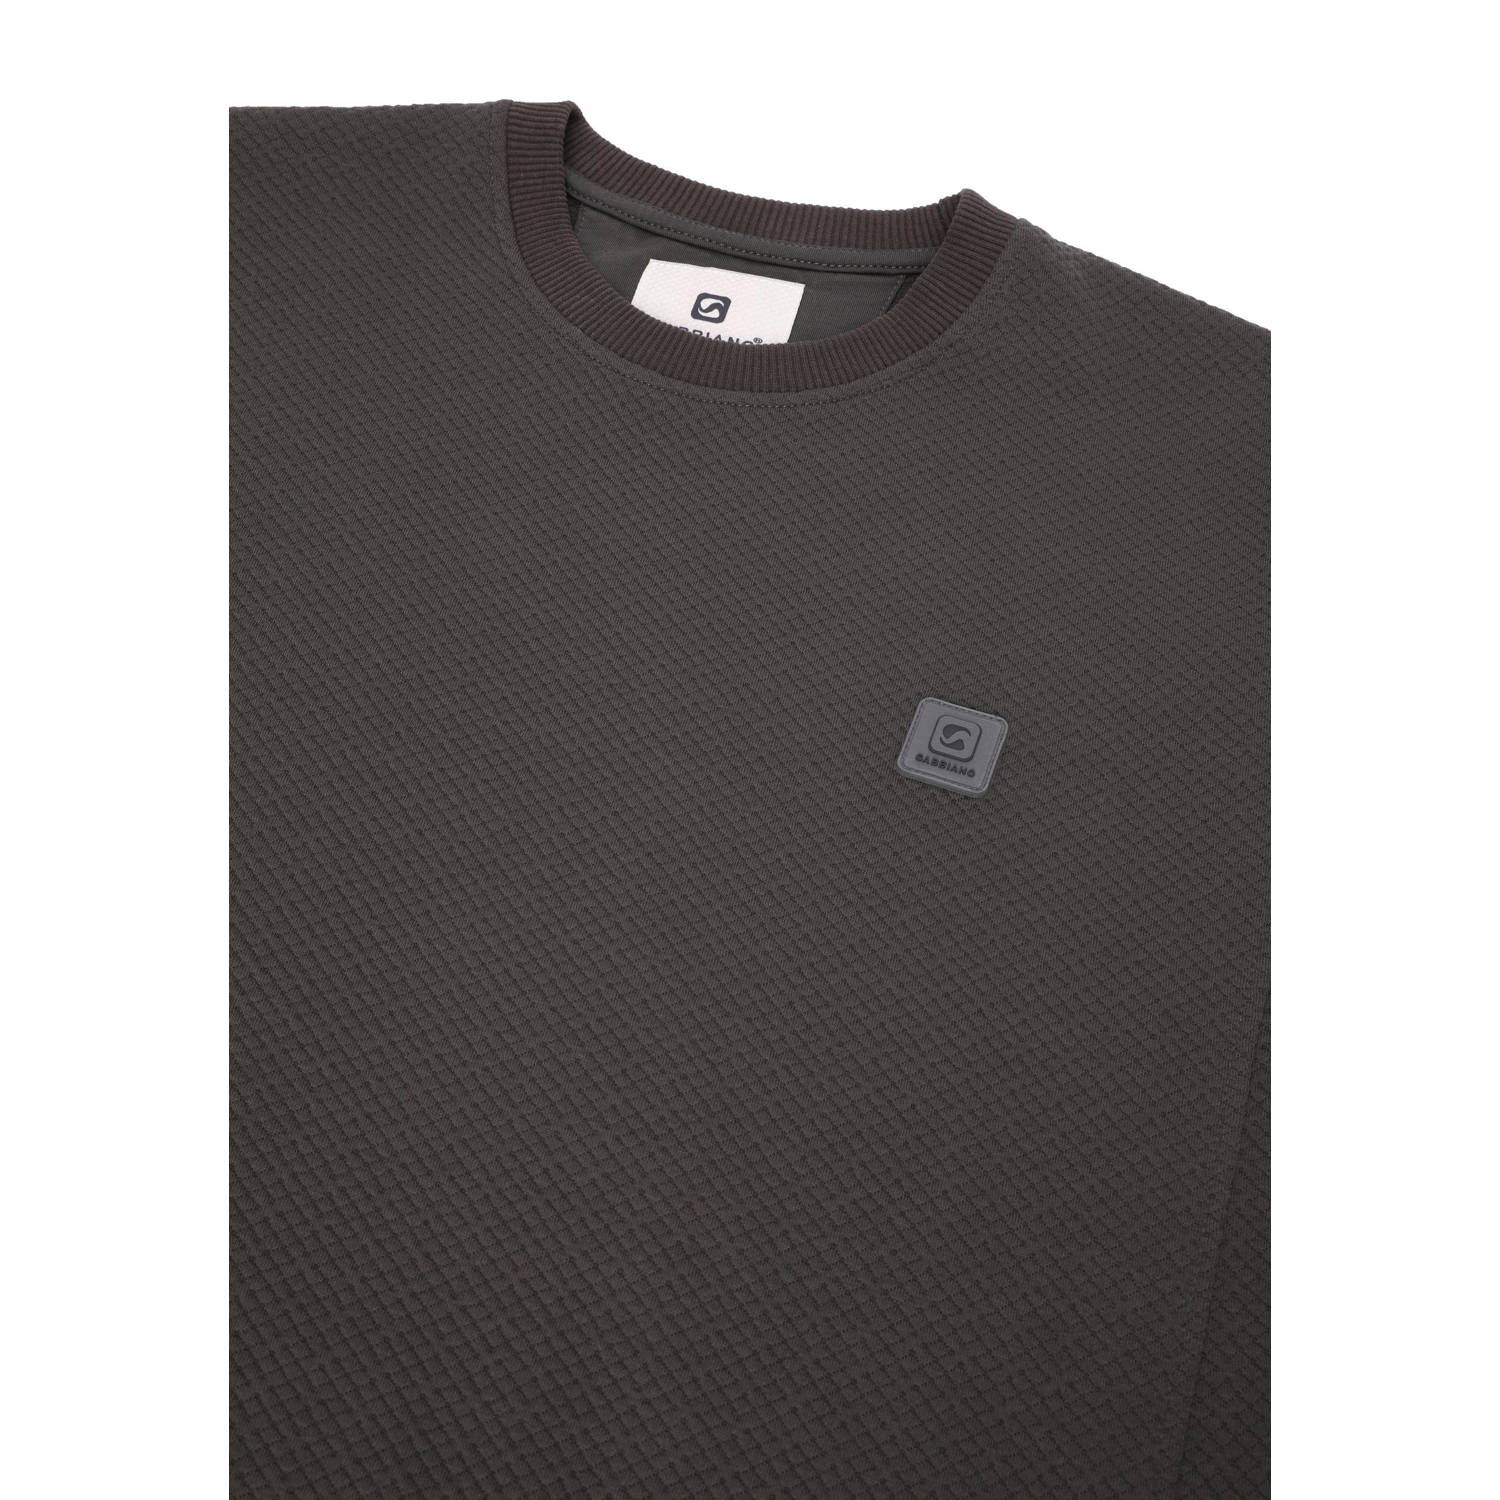 GABBIANO sweater met logo en textuur black coffee